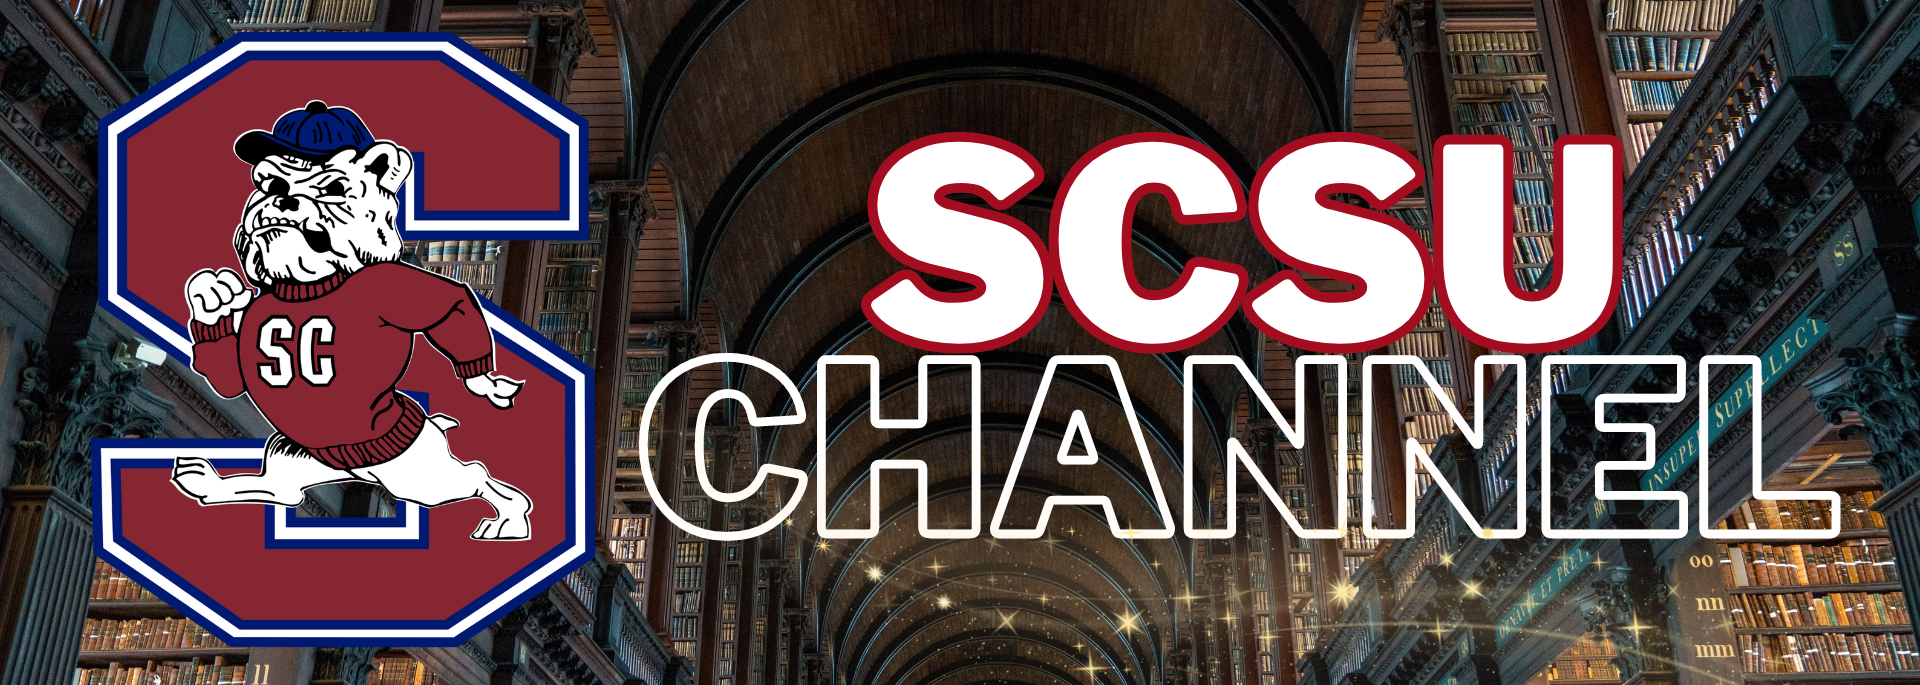 South Carolina State University Channel channel